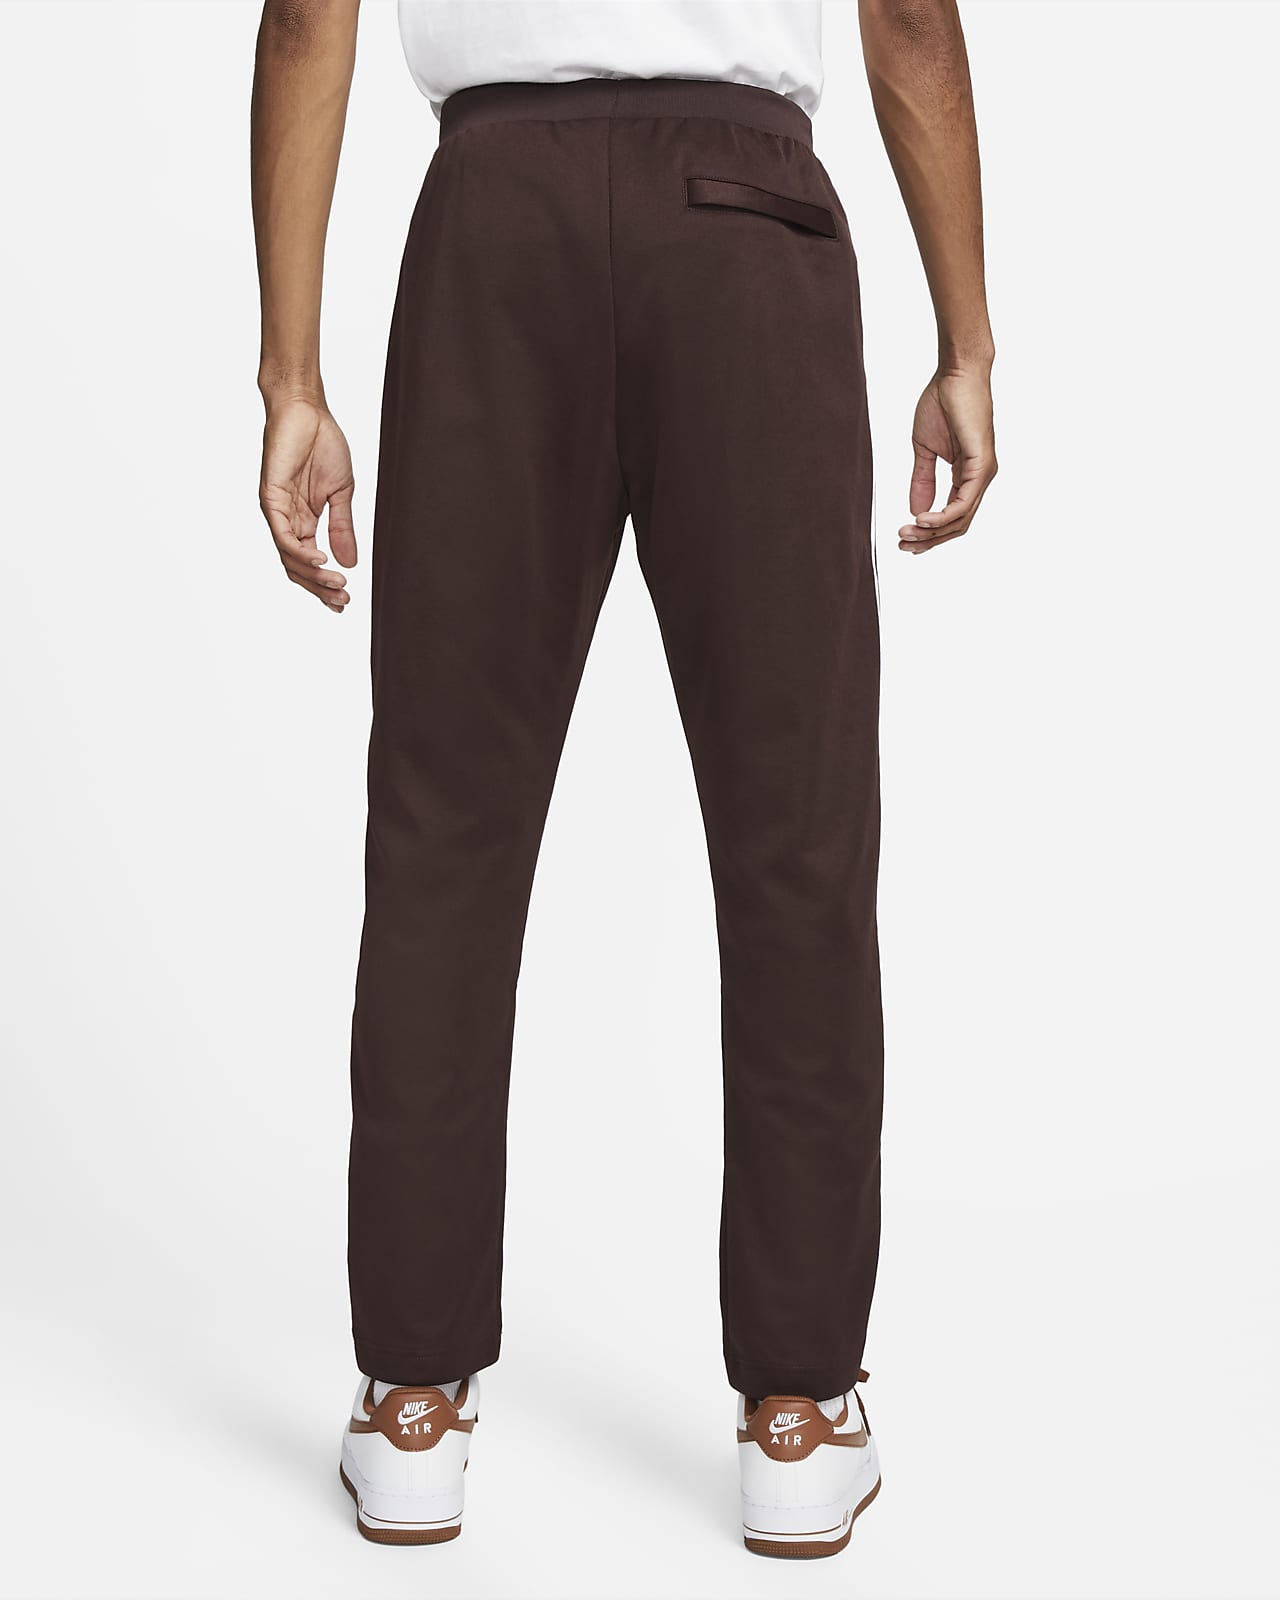 Buy Grey Track Pants for Men by BIG BANANA Online | Ajio.com